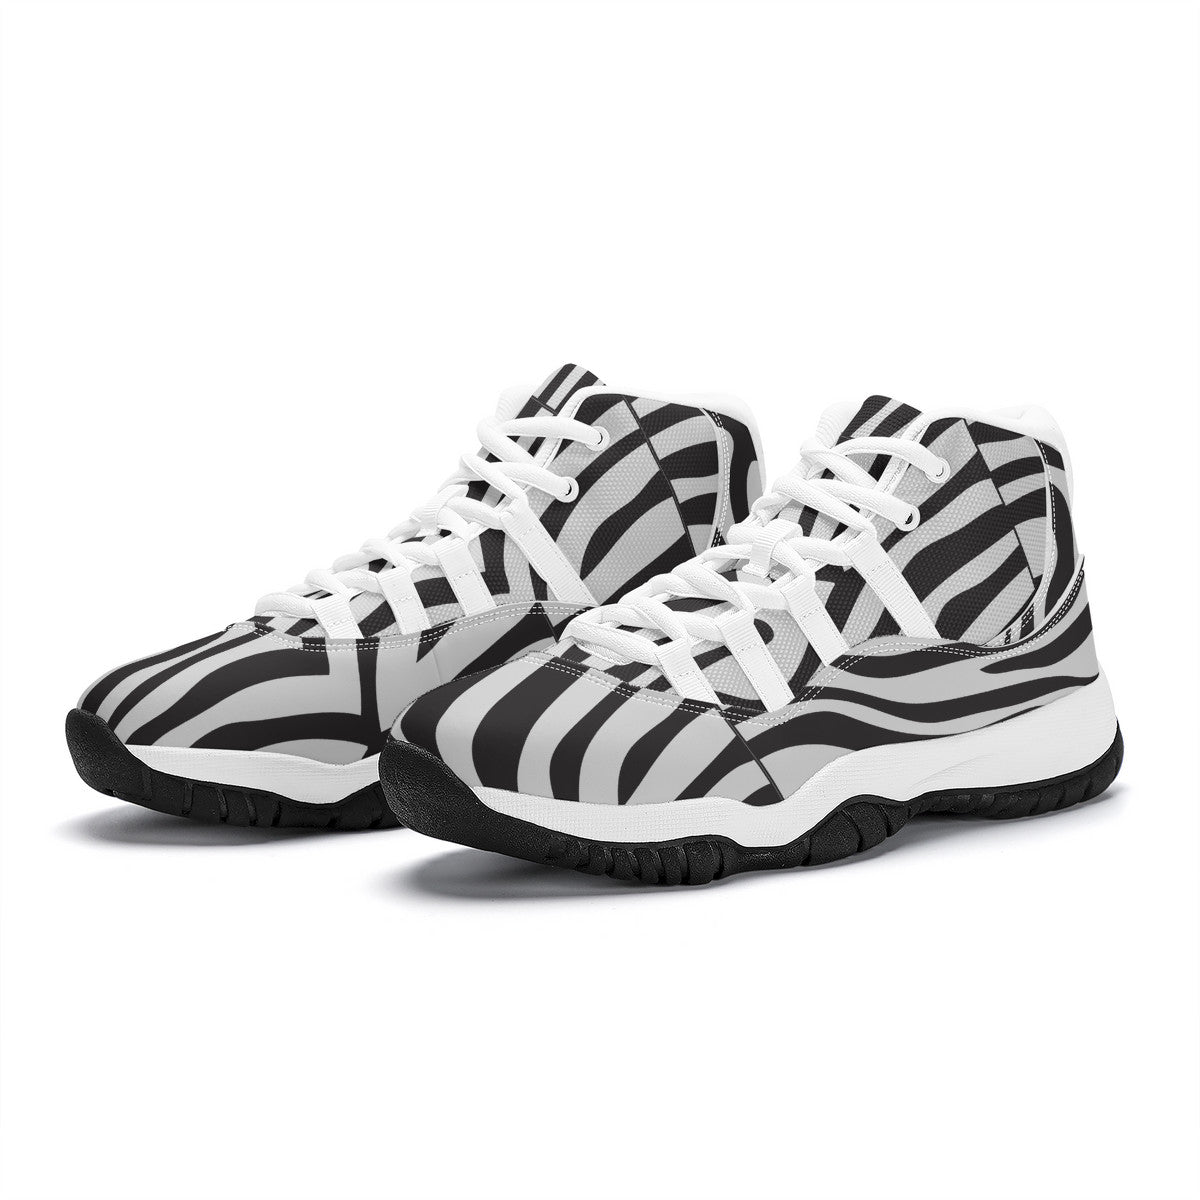 AZONTO  SF_S38 High Top Air Retro Sneakers - White